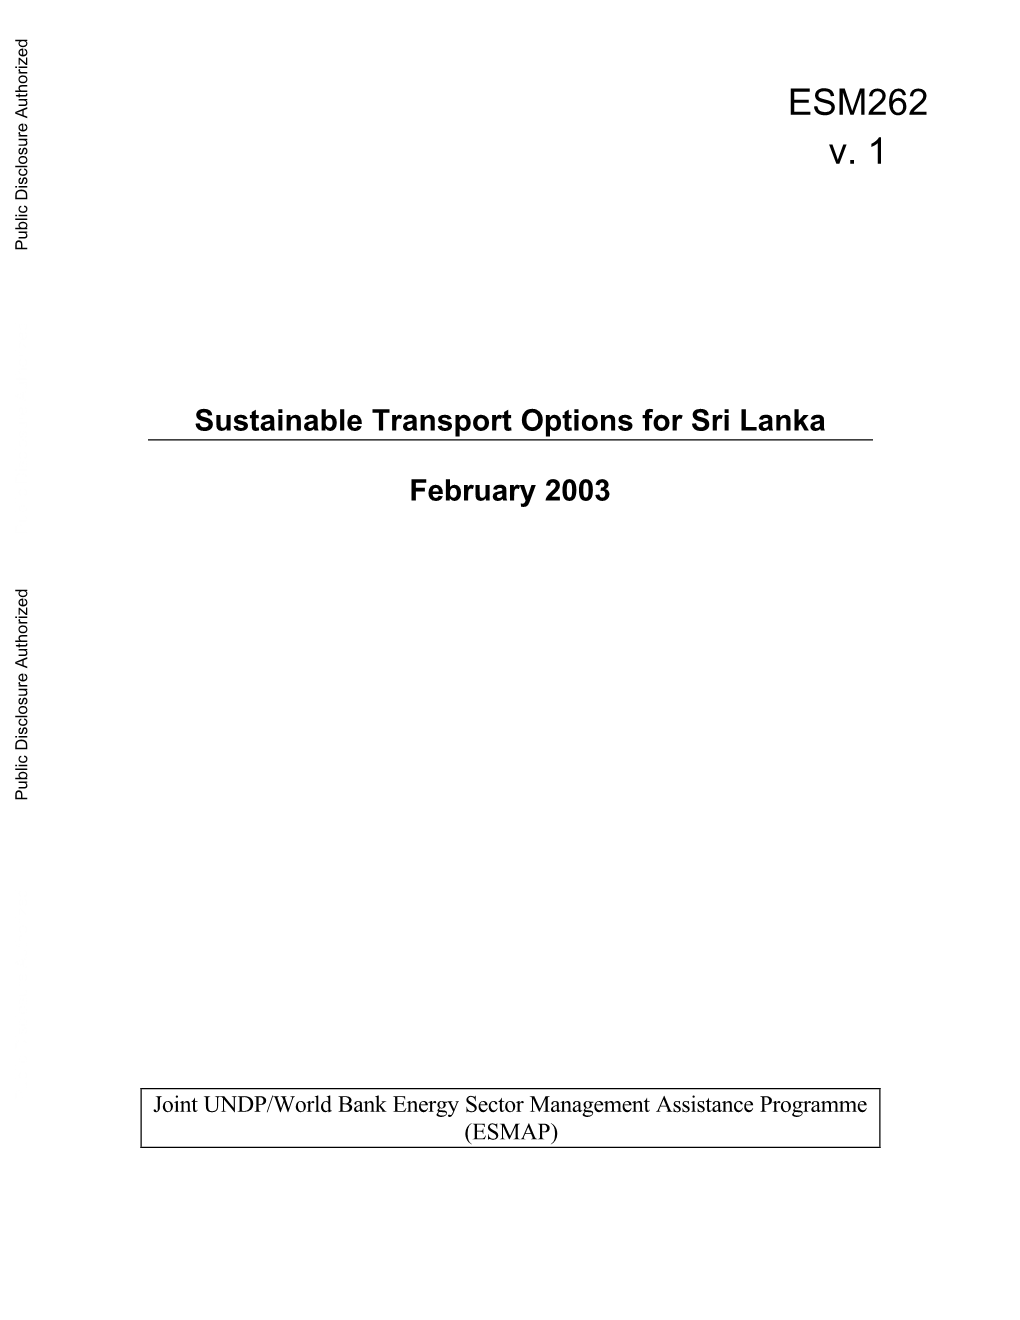 Sustainable Transport Options for Sri Lanka February 2003